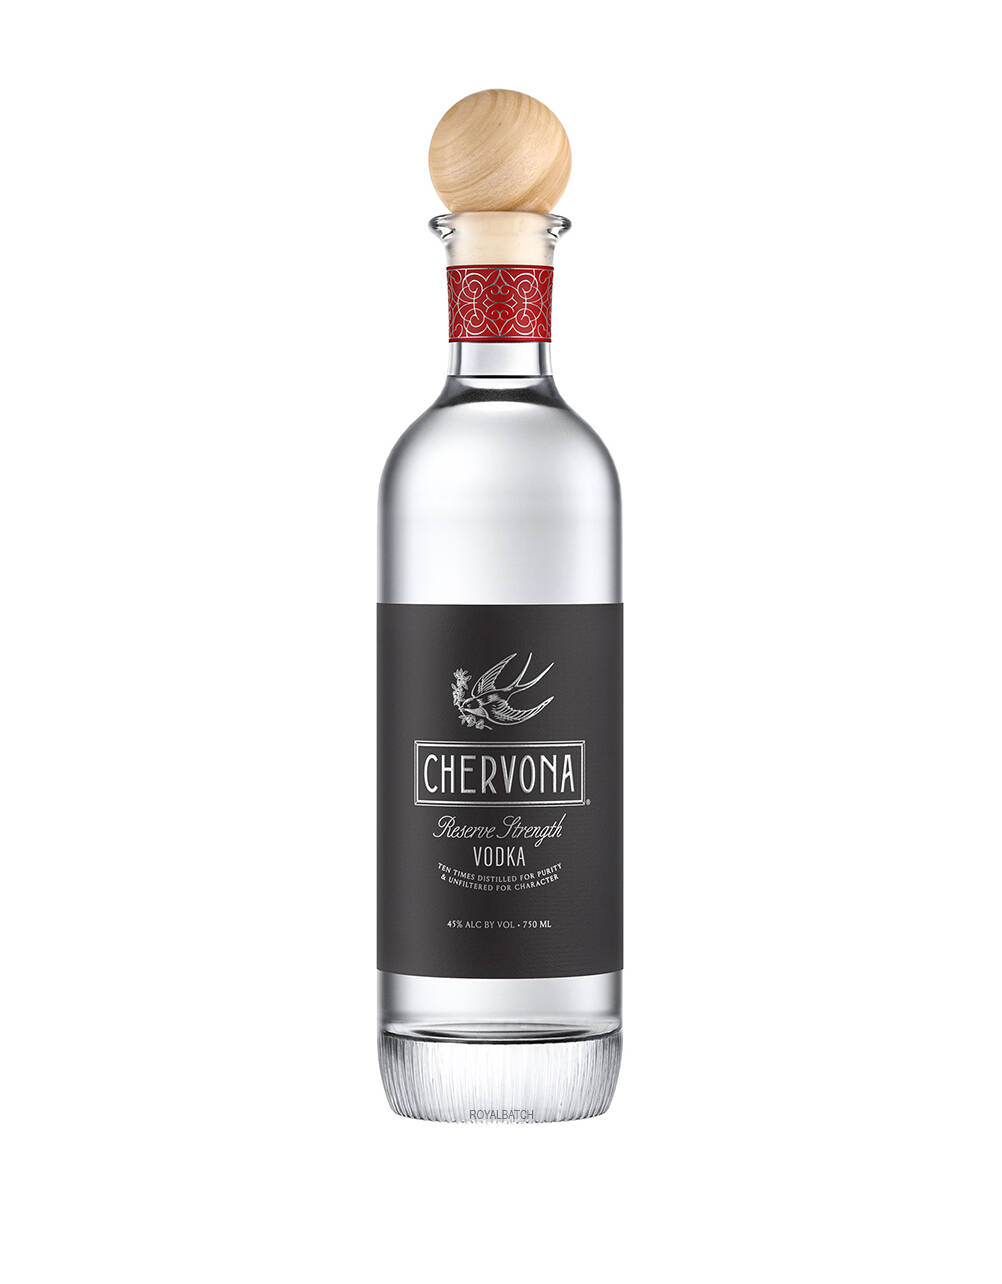 Chervona Reserve Strength Vodka